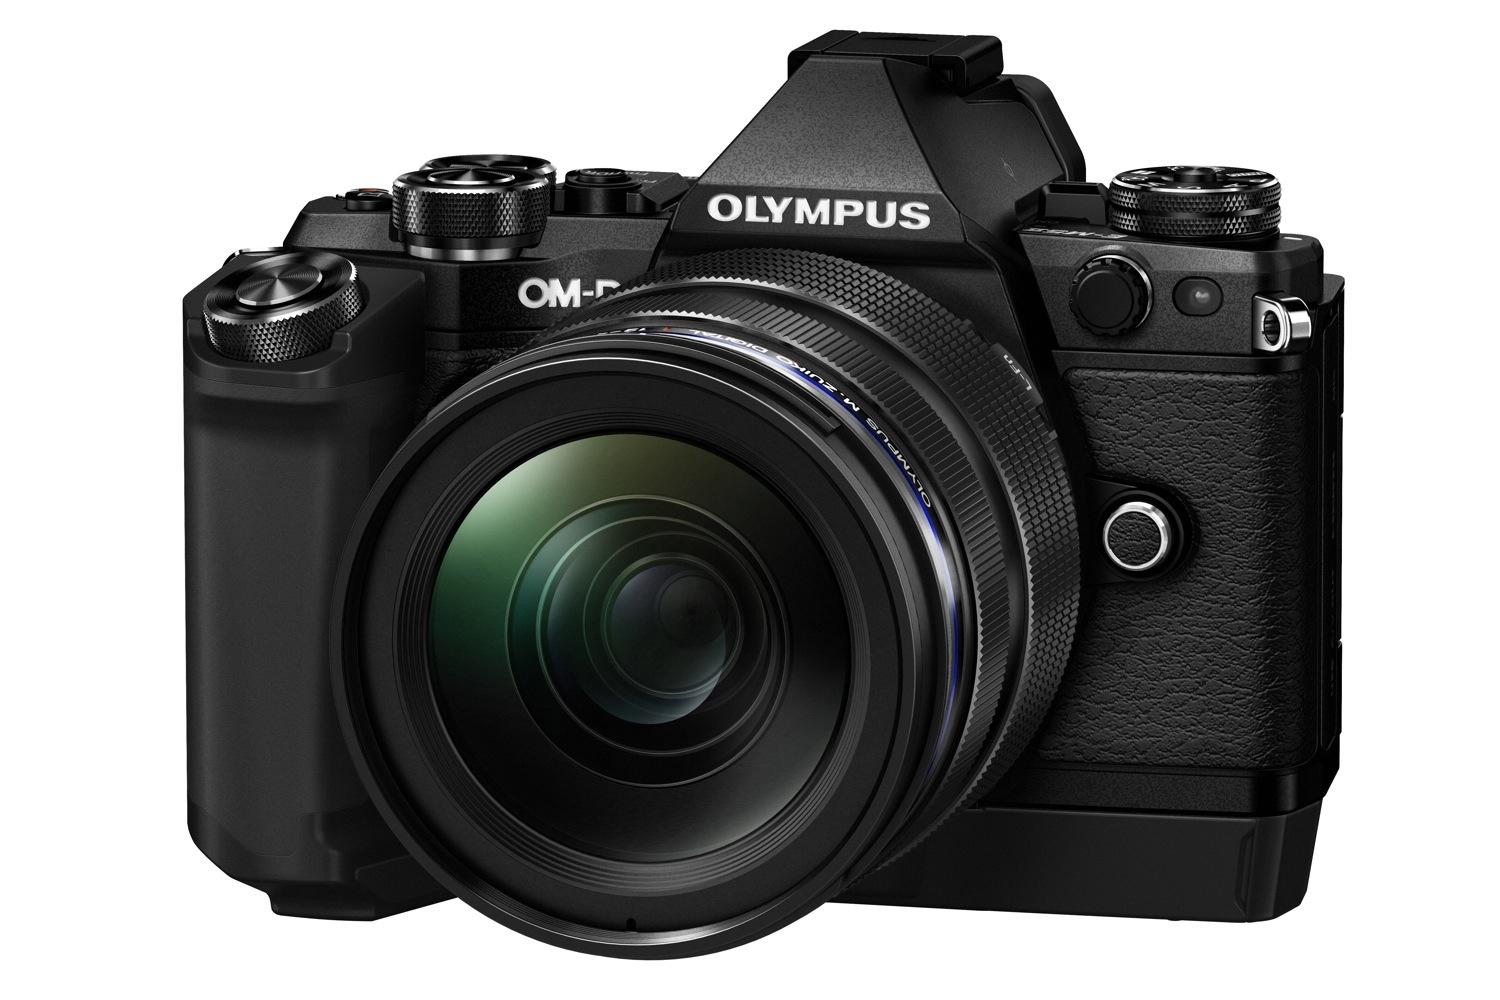 olympus e m5 mark ii puts focus movie stabilization 40 megapixel photos m5markii blk right m1240 hld8g